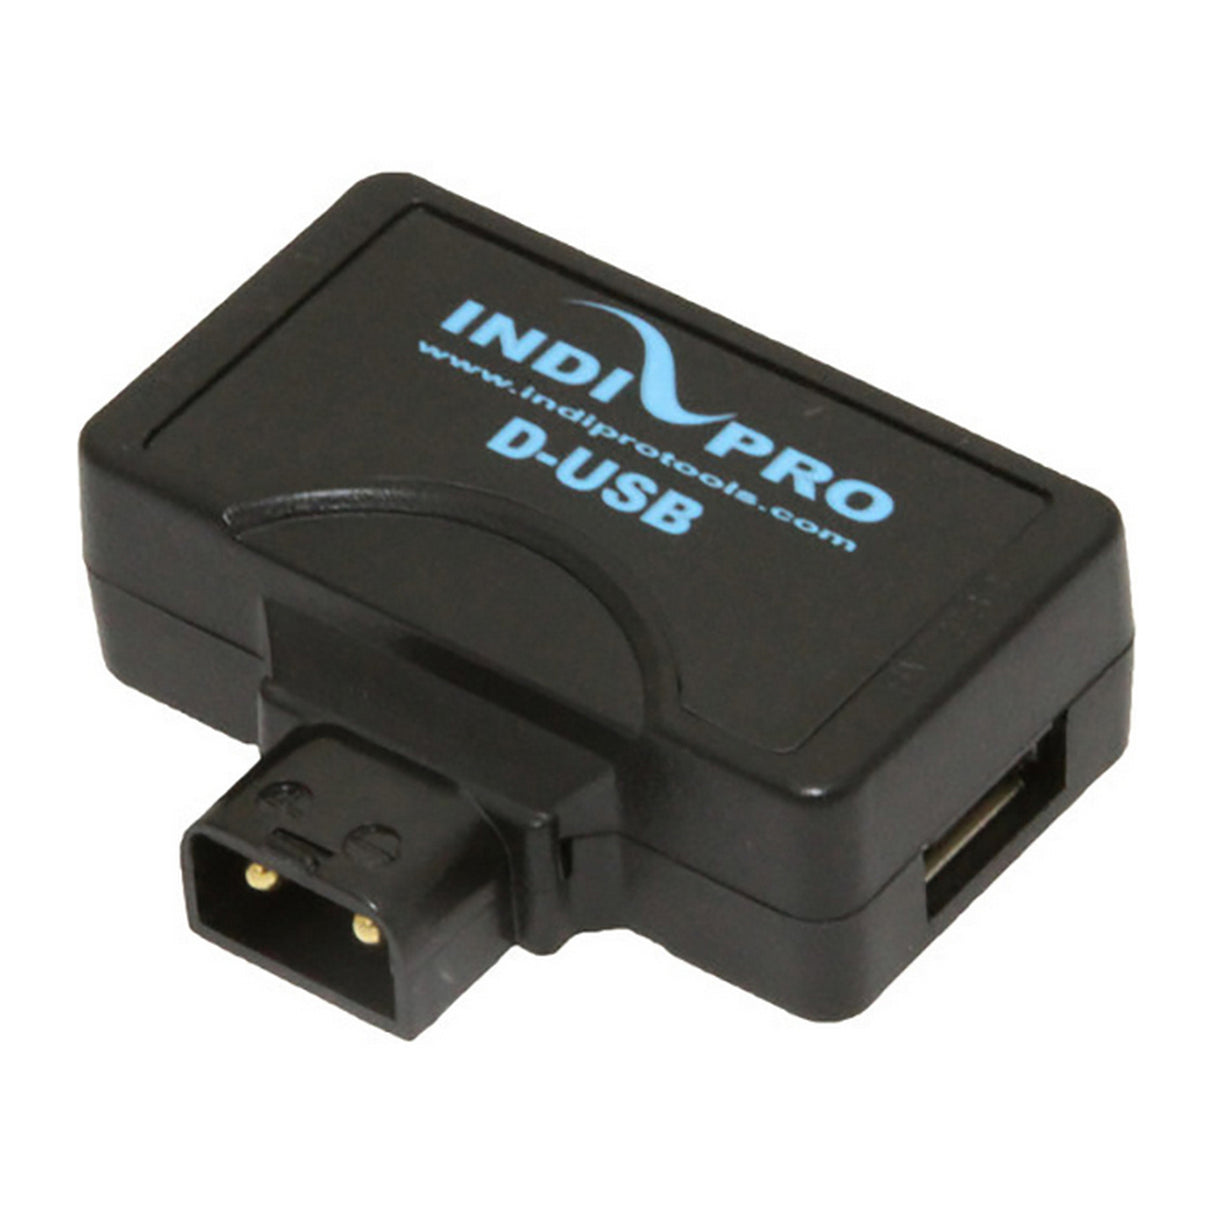 IndiPRO DTUSB5 | D-USB Adapter Accessory